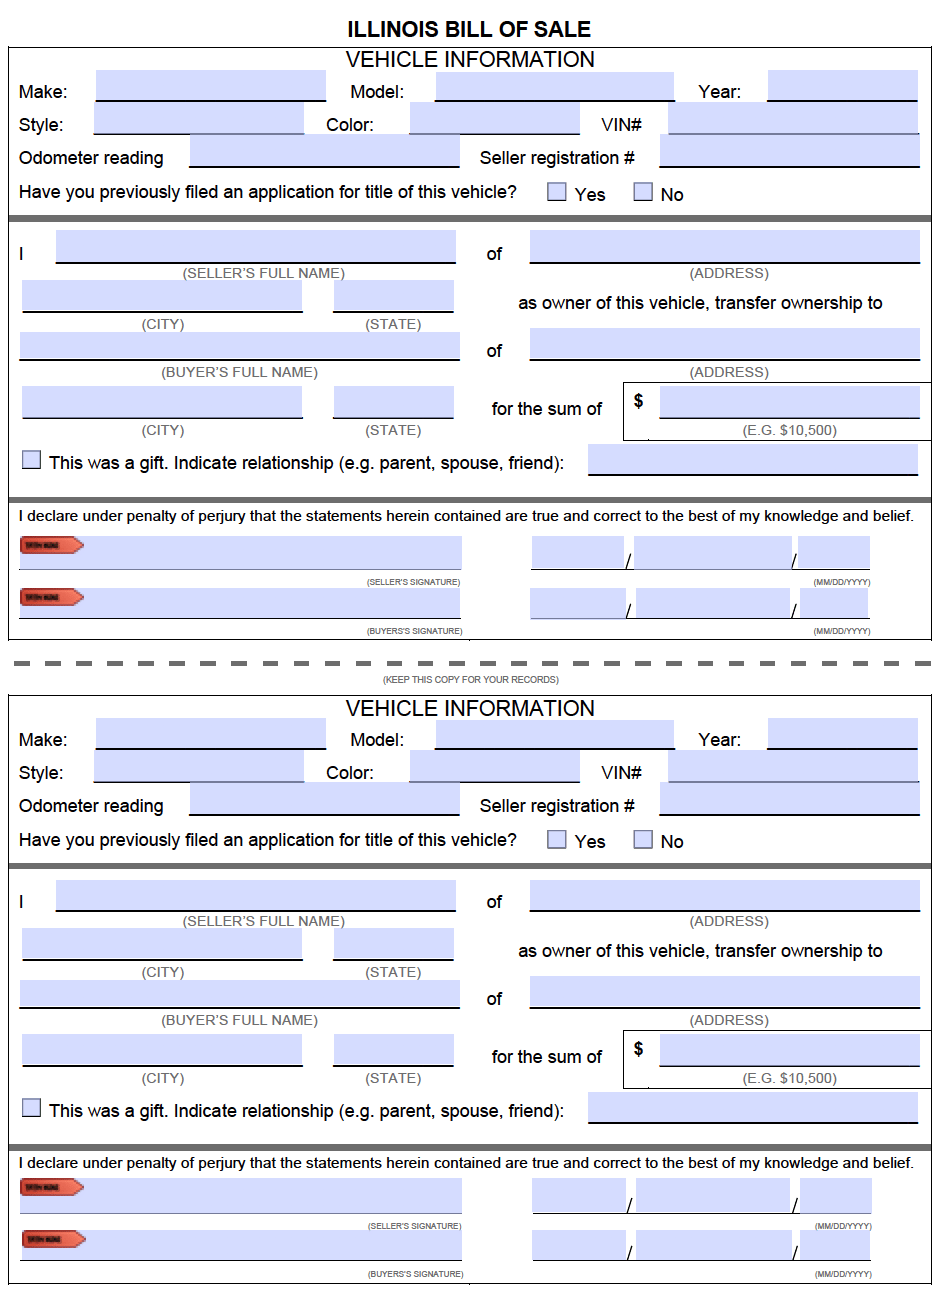 illinois duplicate title application form vsd 190